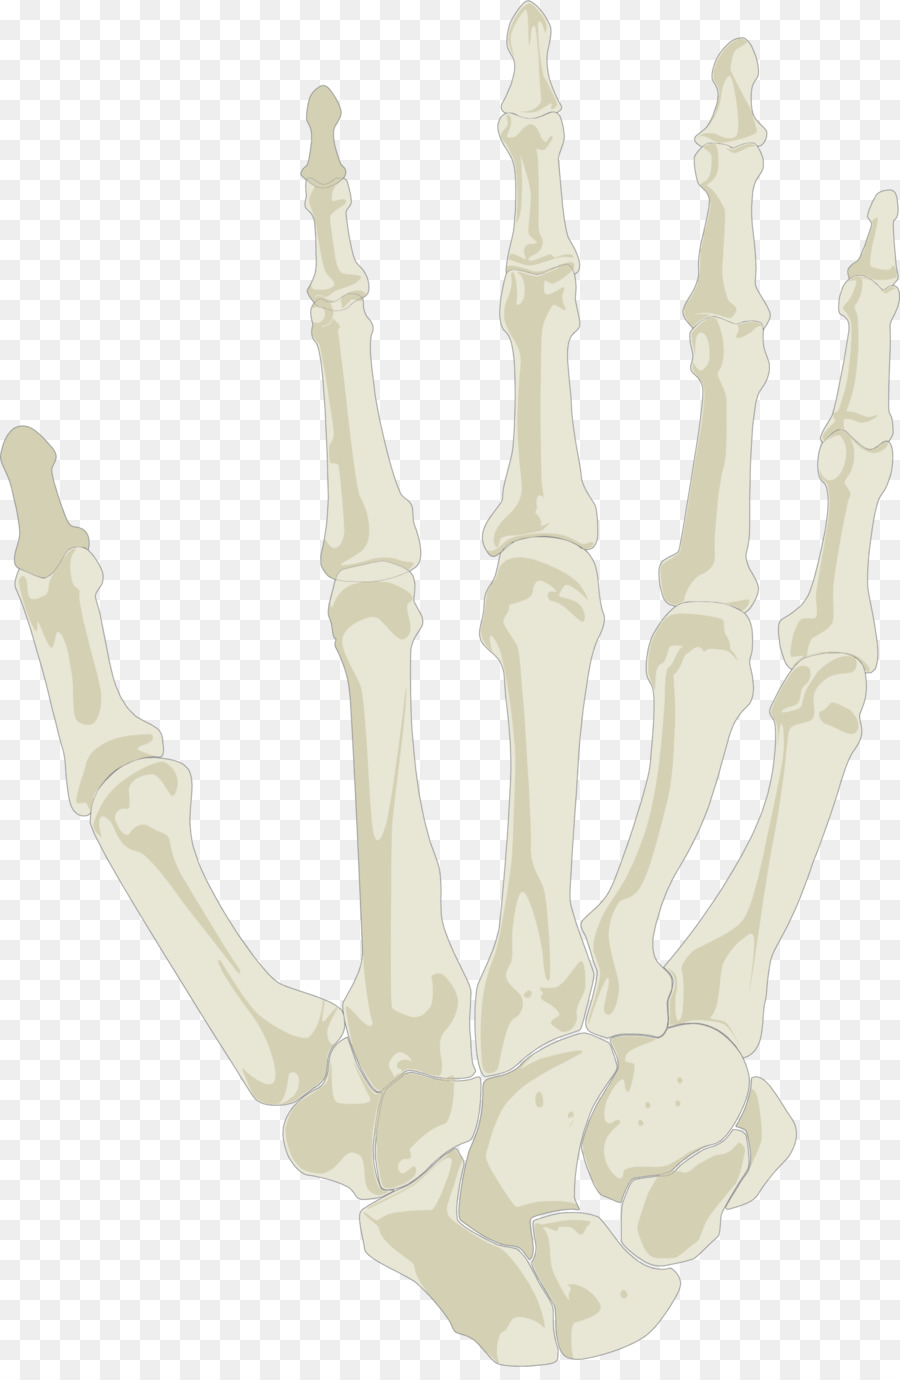 Hand Human skeleton Skull - hand png download - 1458*2214 - Free Transparent Hand png Download.